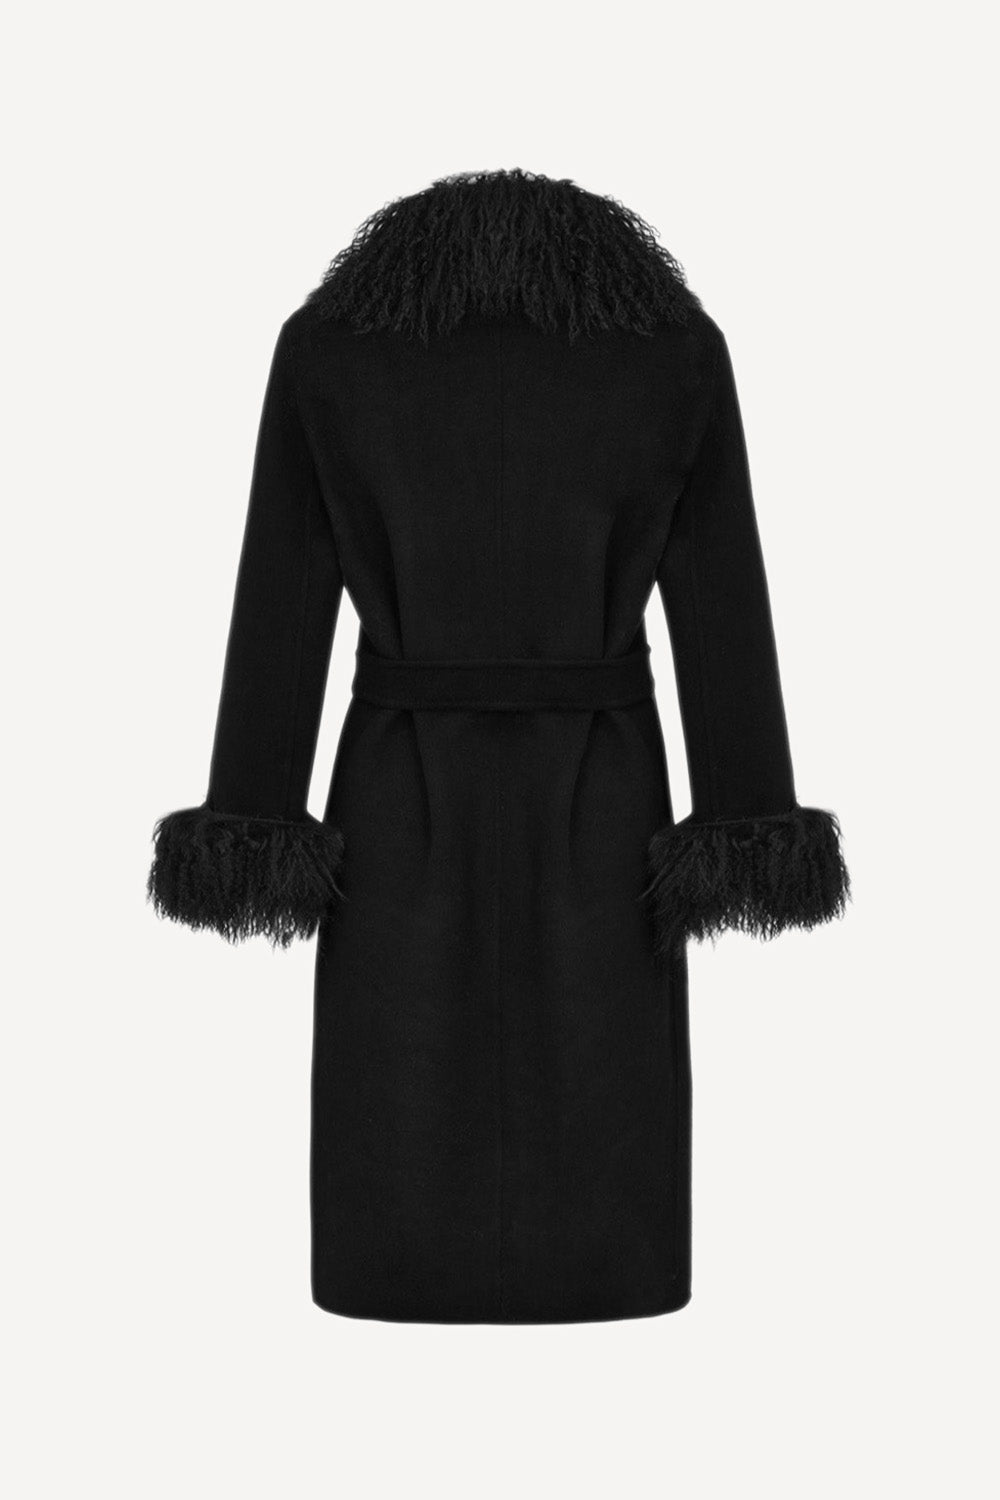 Cashmere & shearling coat in black